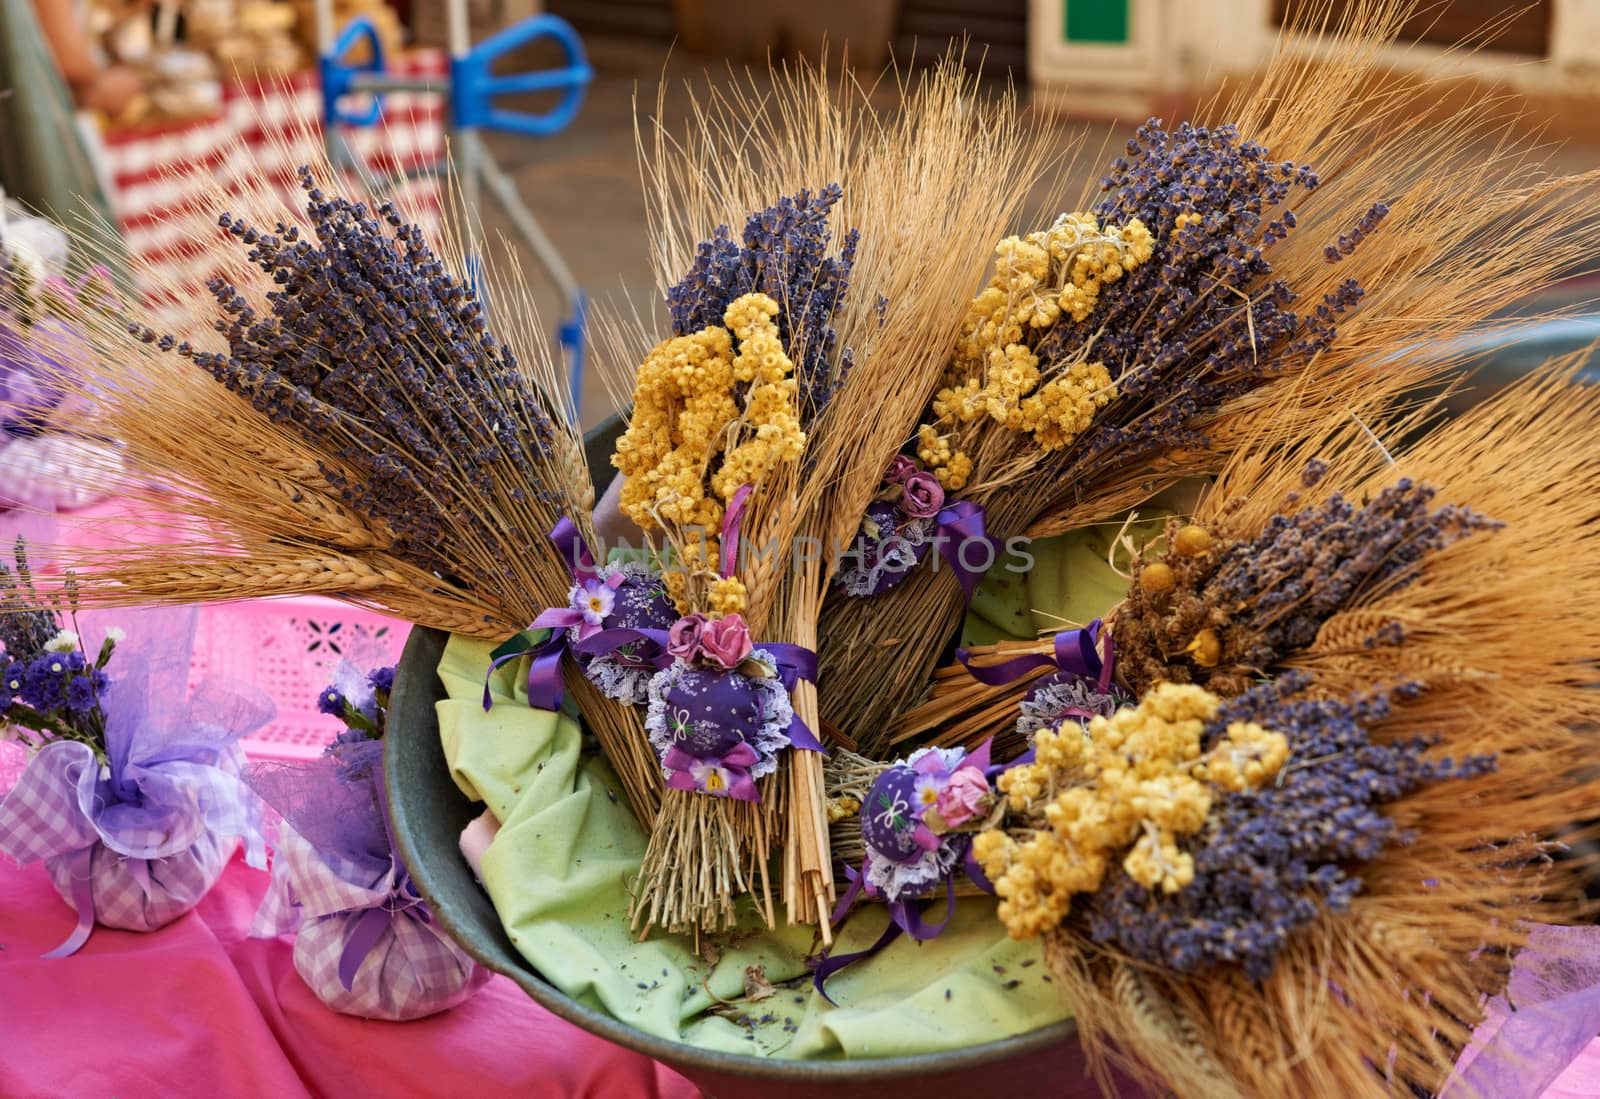 Lavender bouquet at the market in Aix en Provence, France